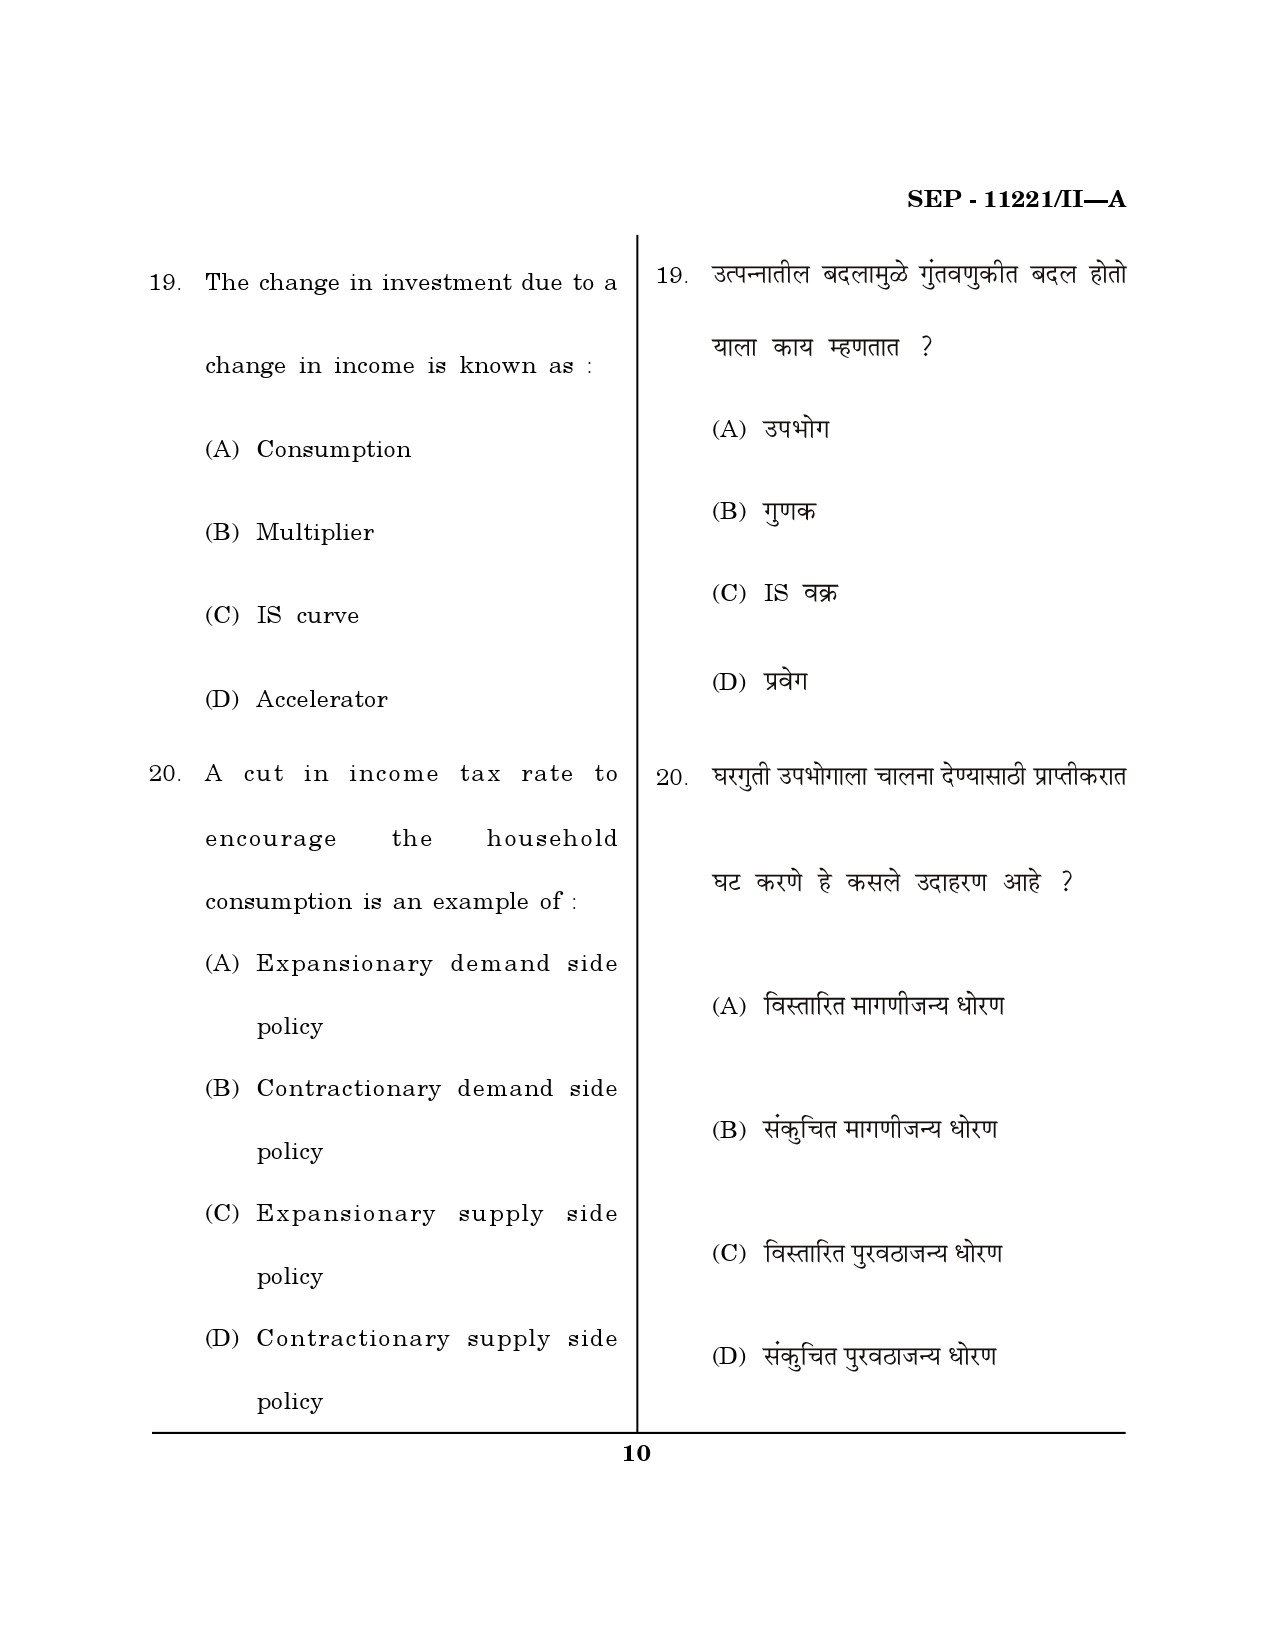 Maharashtra SET Economics Exam Question Paper September 2021 9